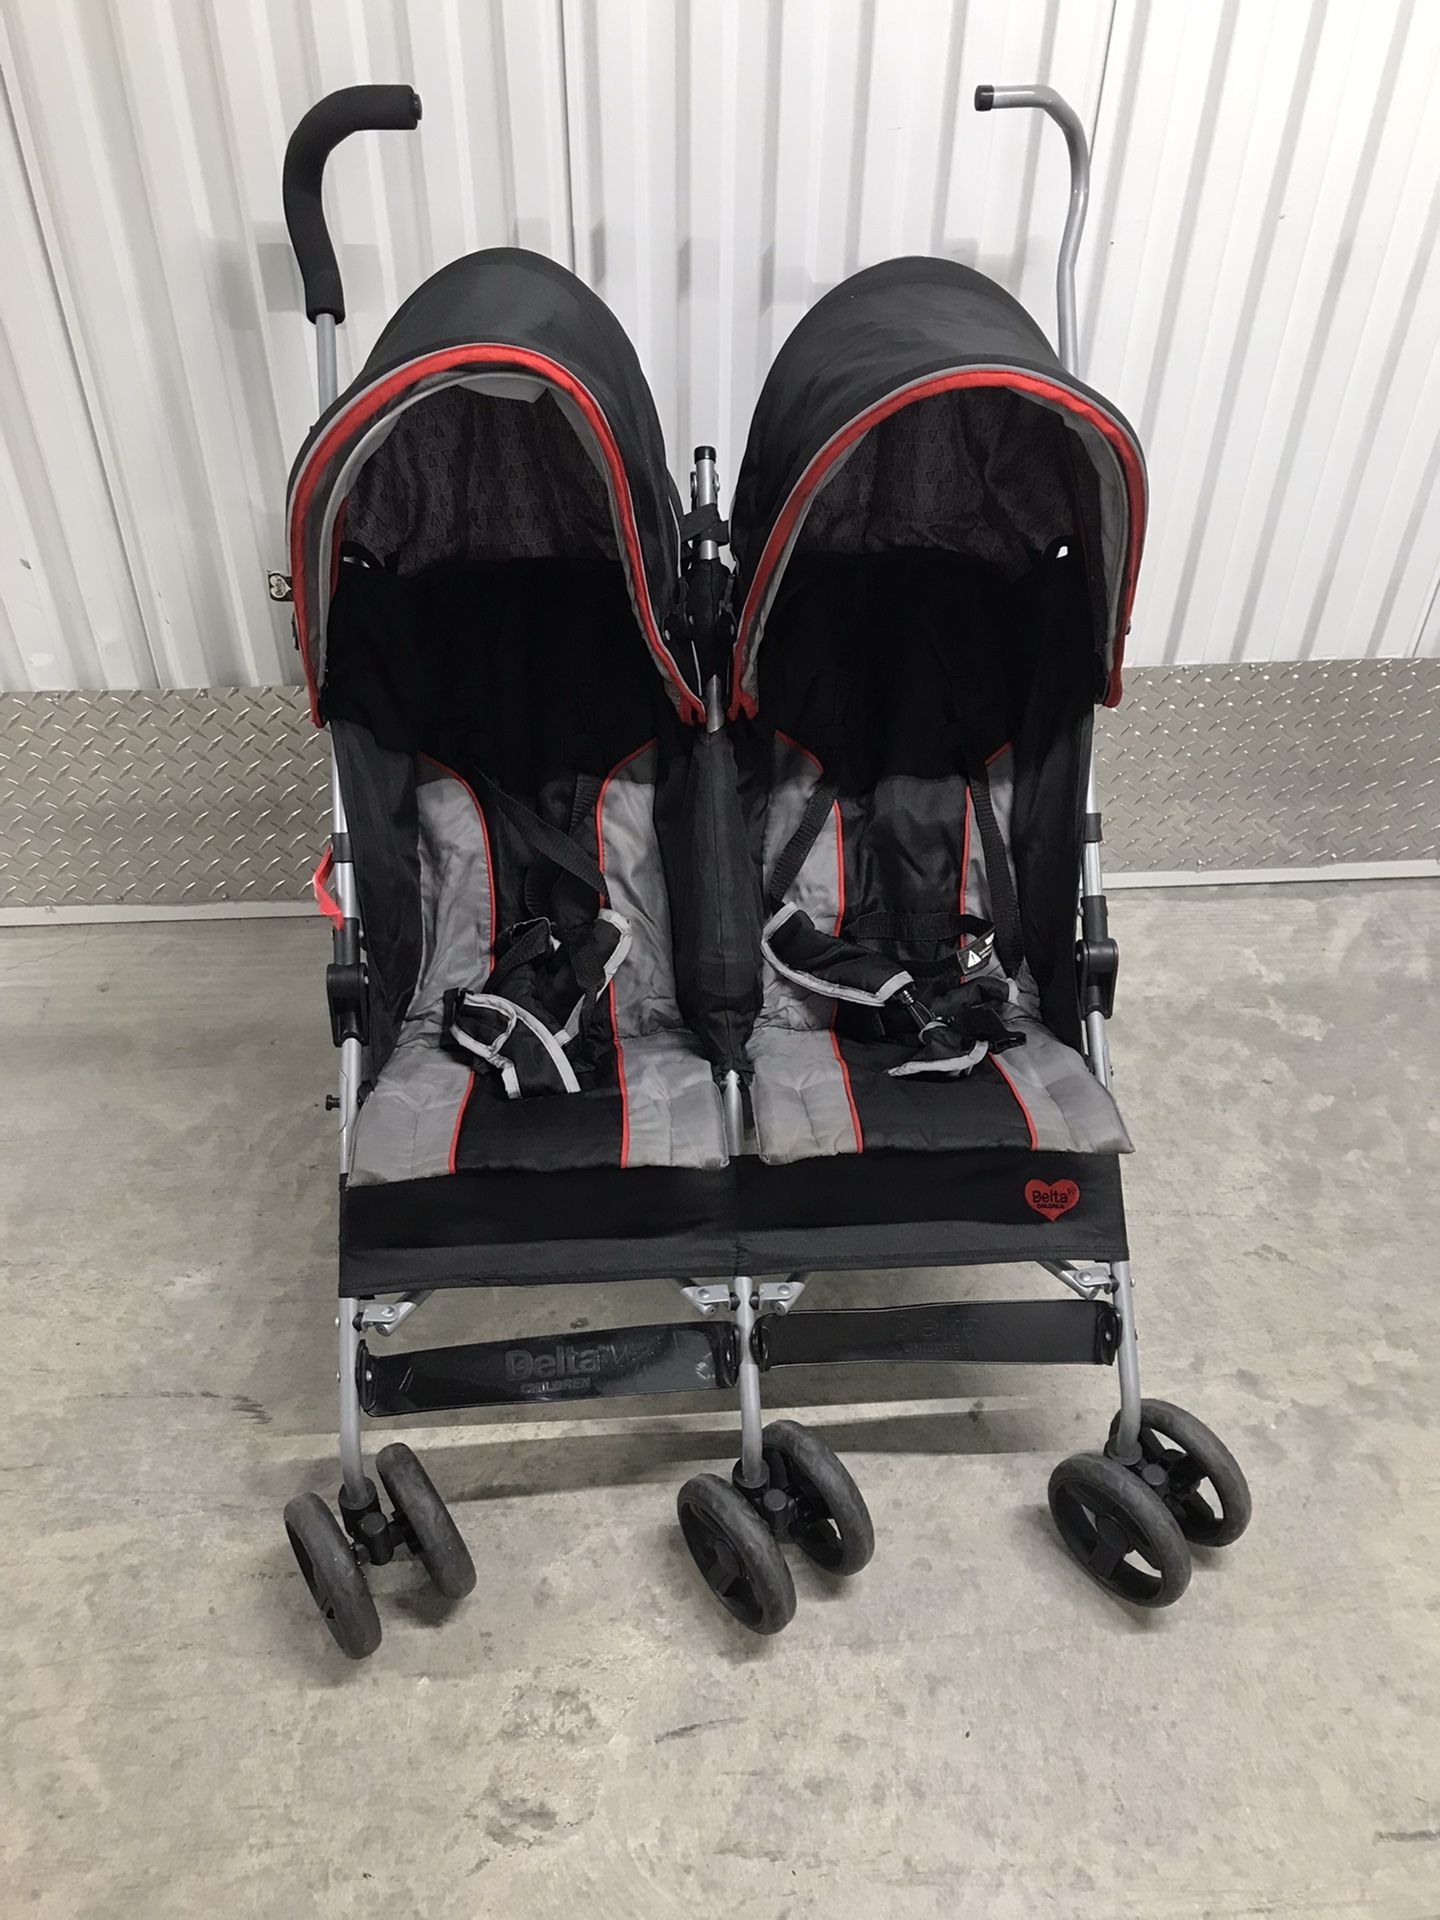  Double stroller